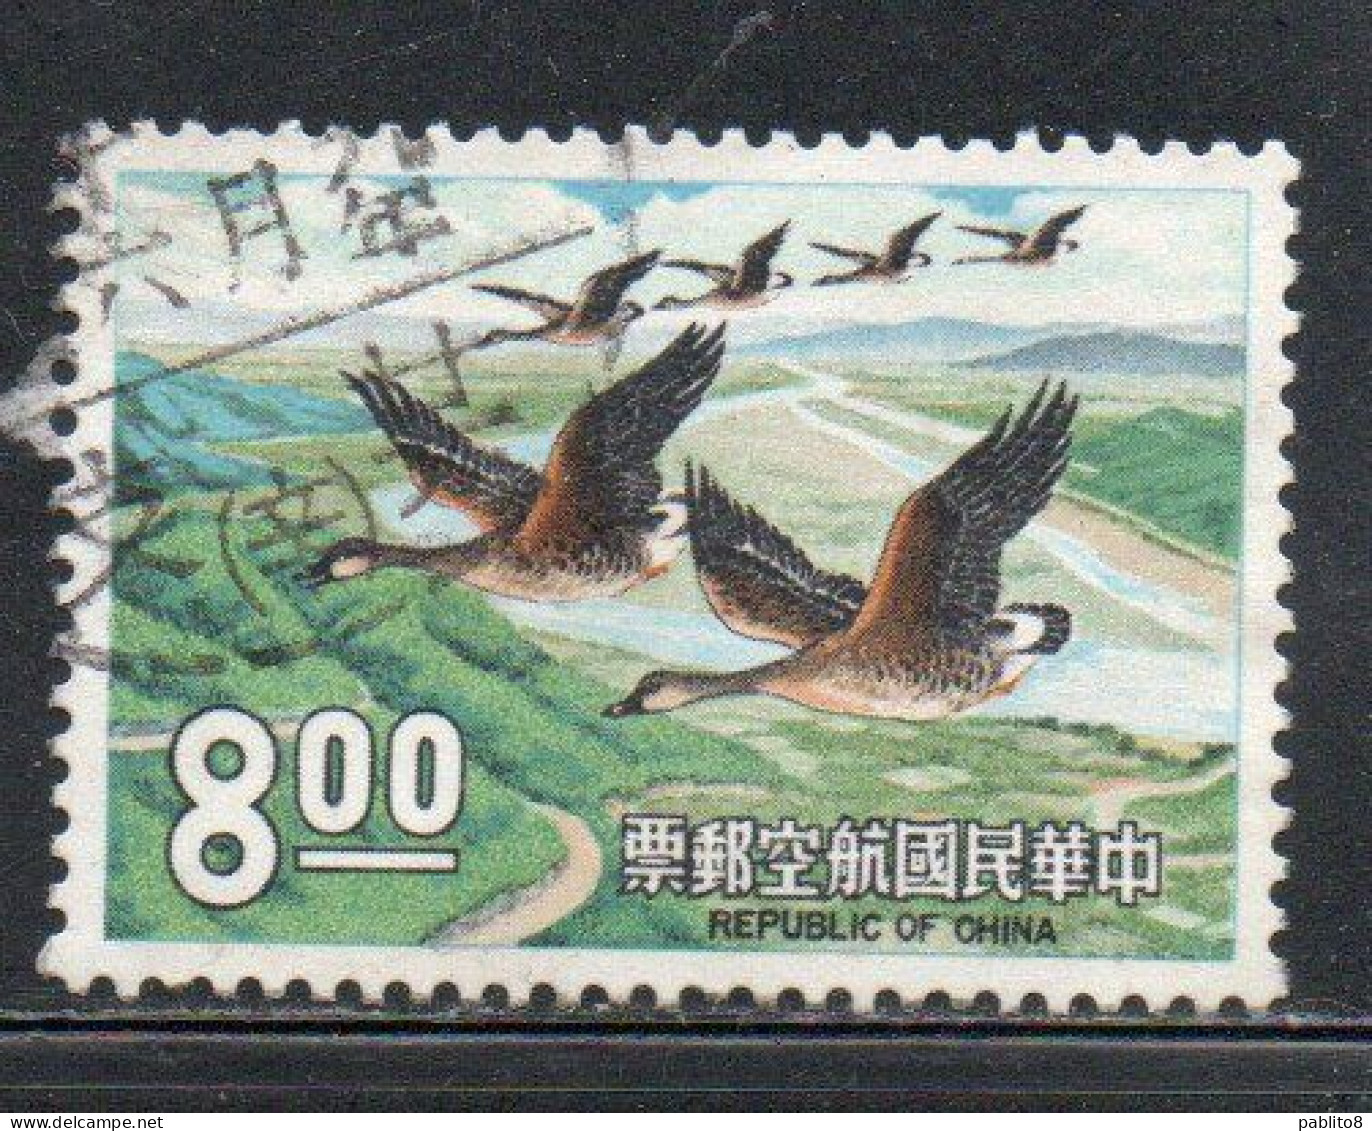 CHINA REPUBLIC CINA TAIWAN FORMOSA 1969 AIR POST MAIL AIRMAIL BIRD FAUNA BIRDS WILD GEESE FLIGT LAND 8$ USED USATO - Posta Aerea